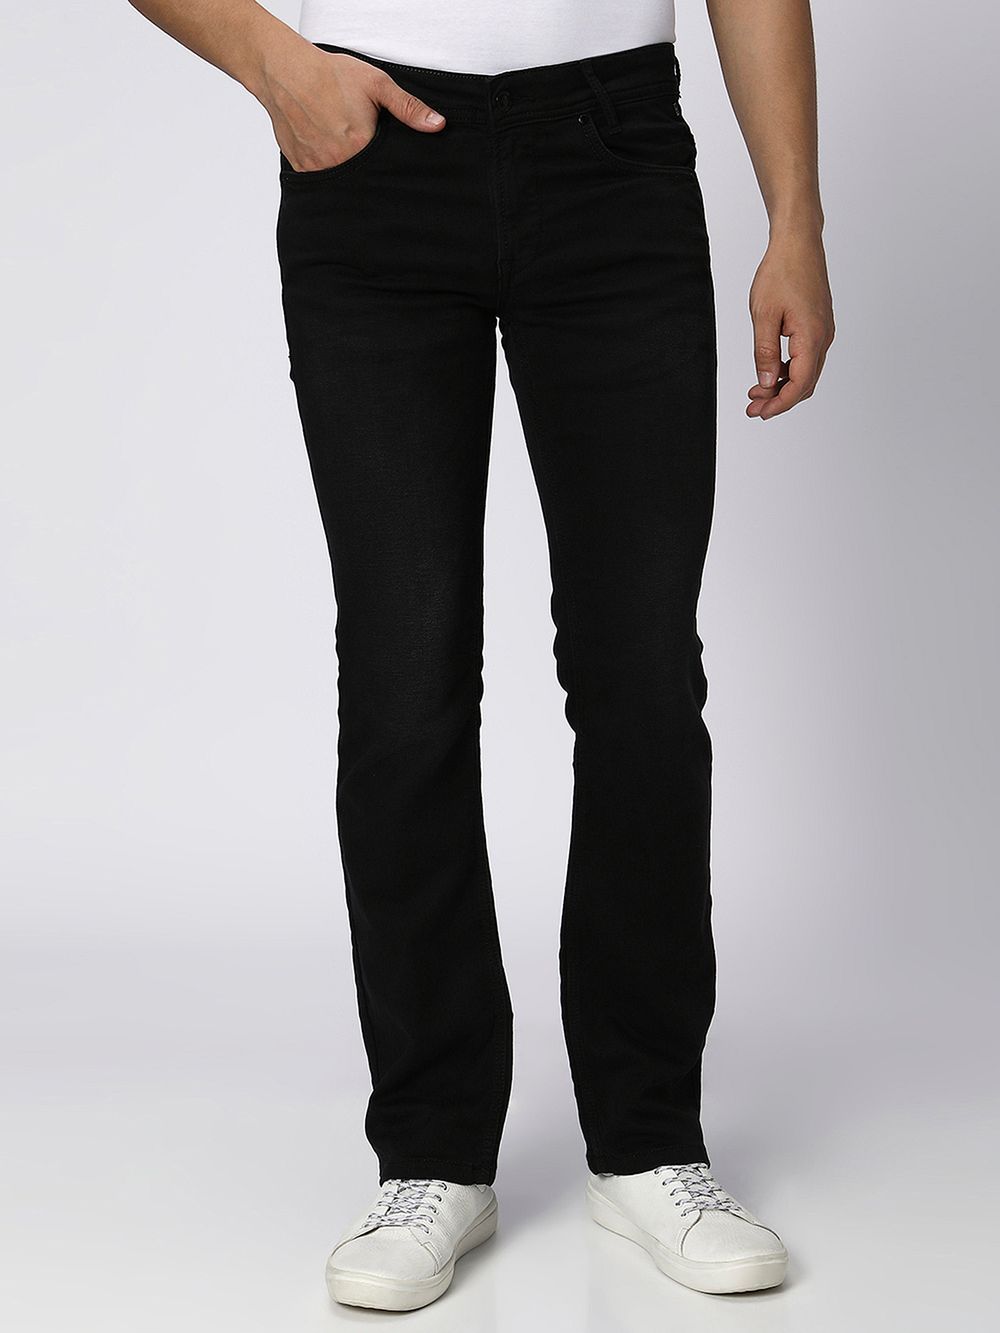 Black Bootcut Distressed Stretch Jeans